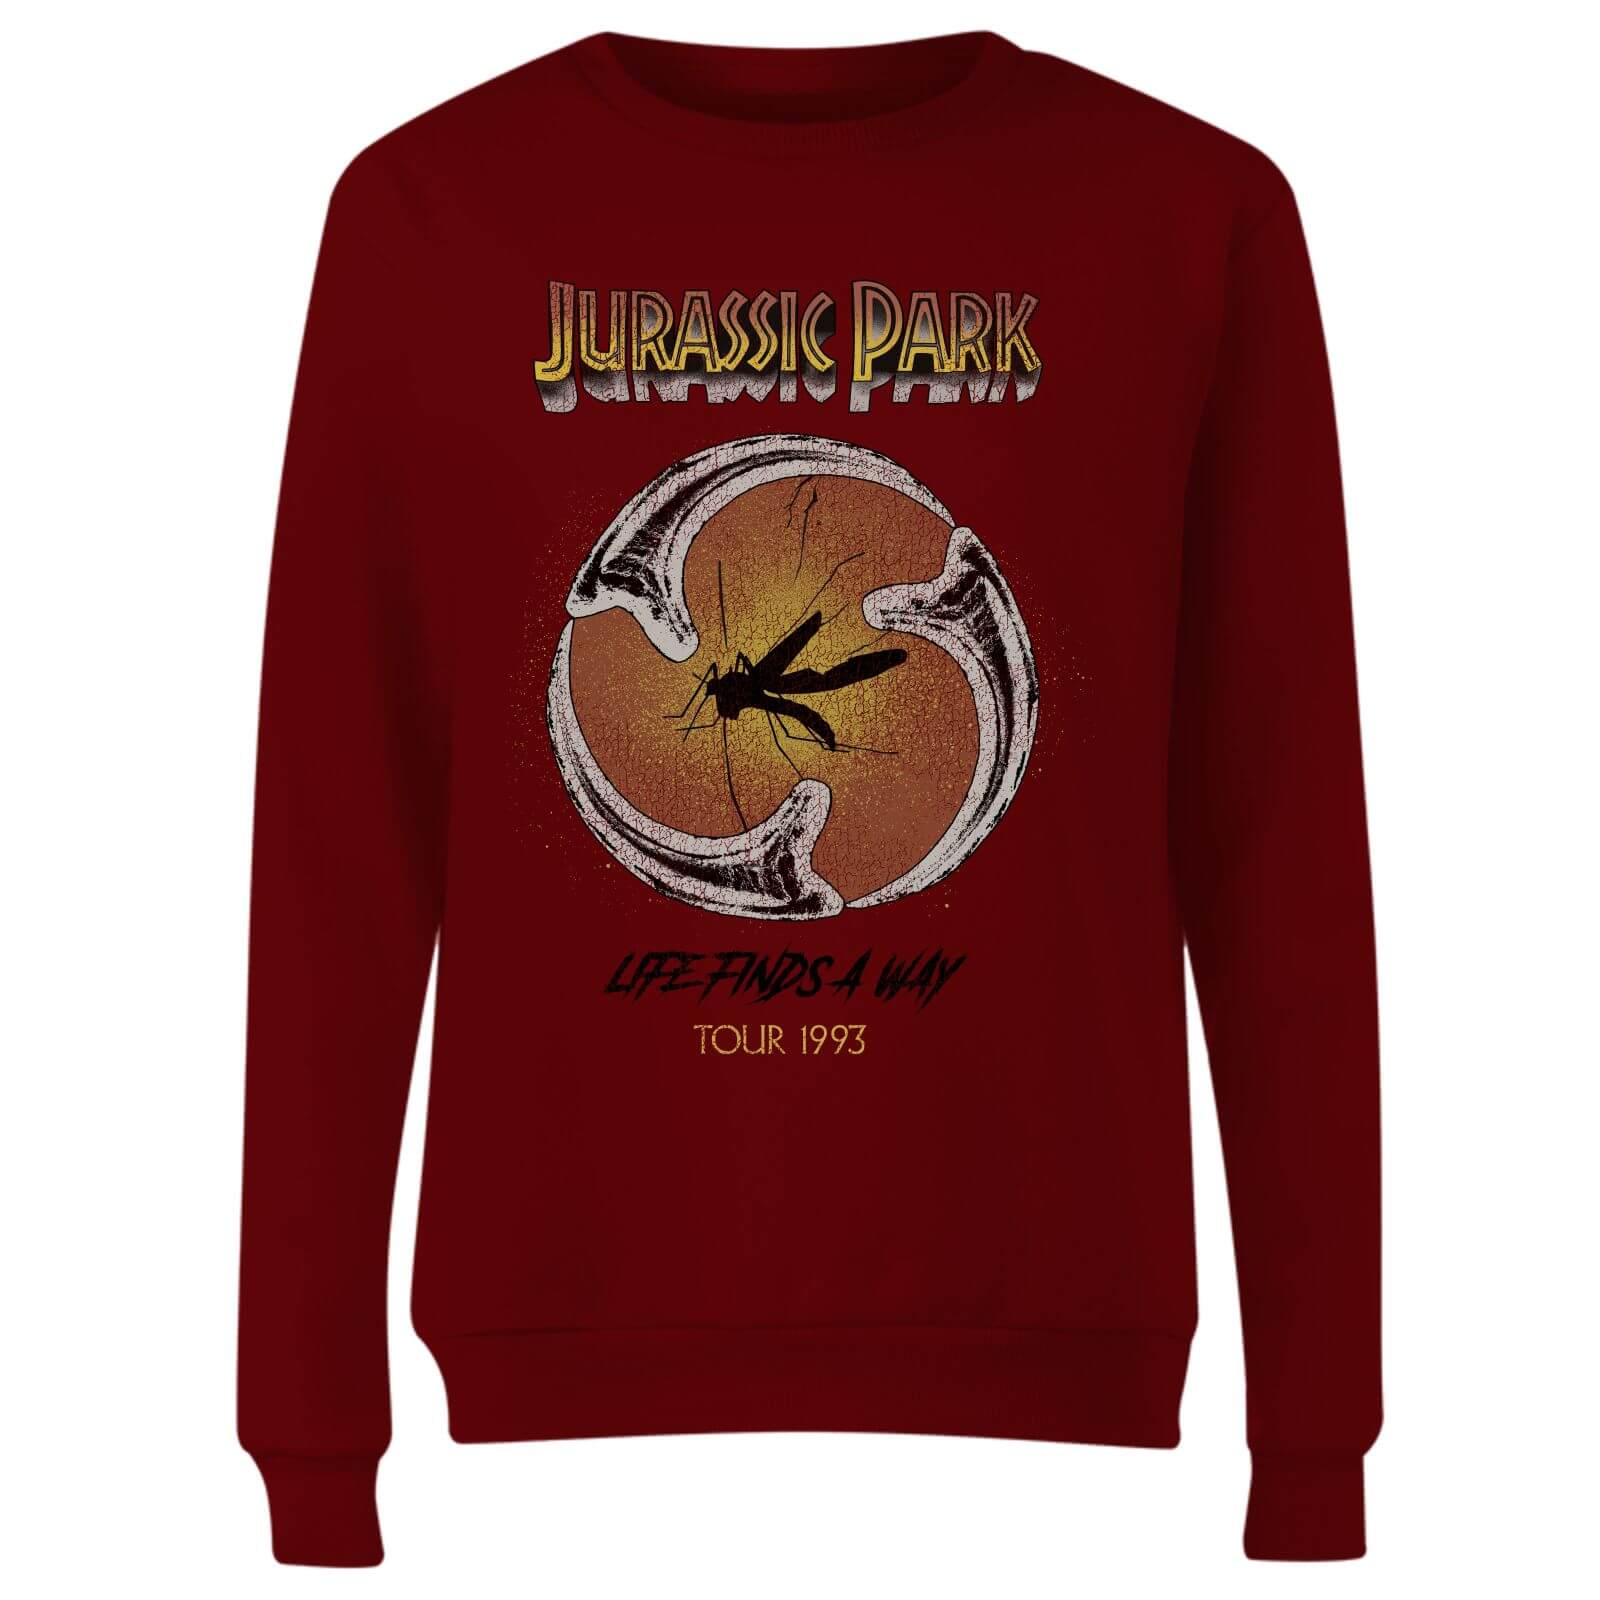 Jurassic Park Life Finds A Way Tour Women's Sweatshirt - Burgundy - S